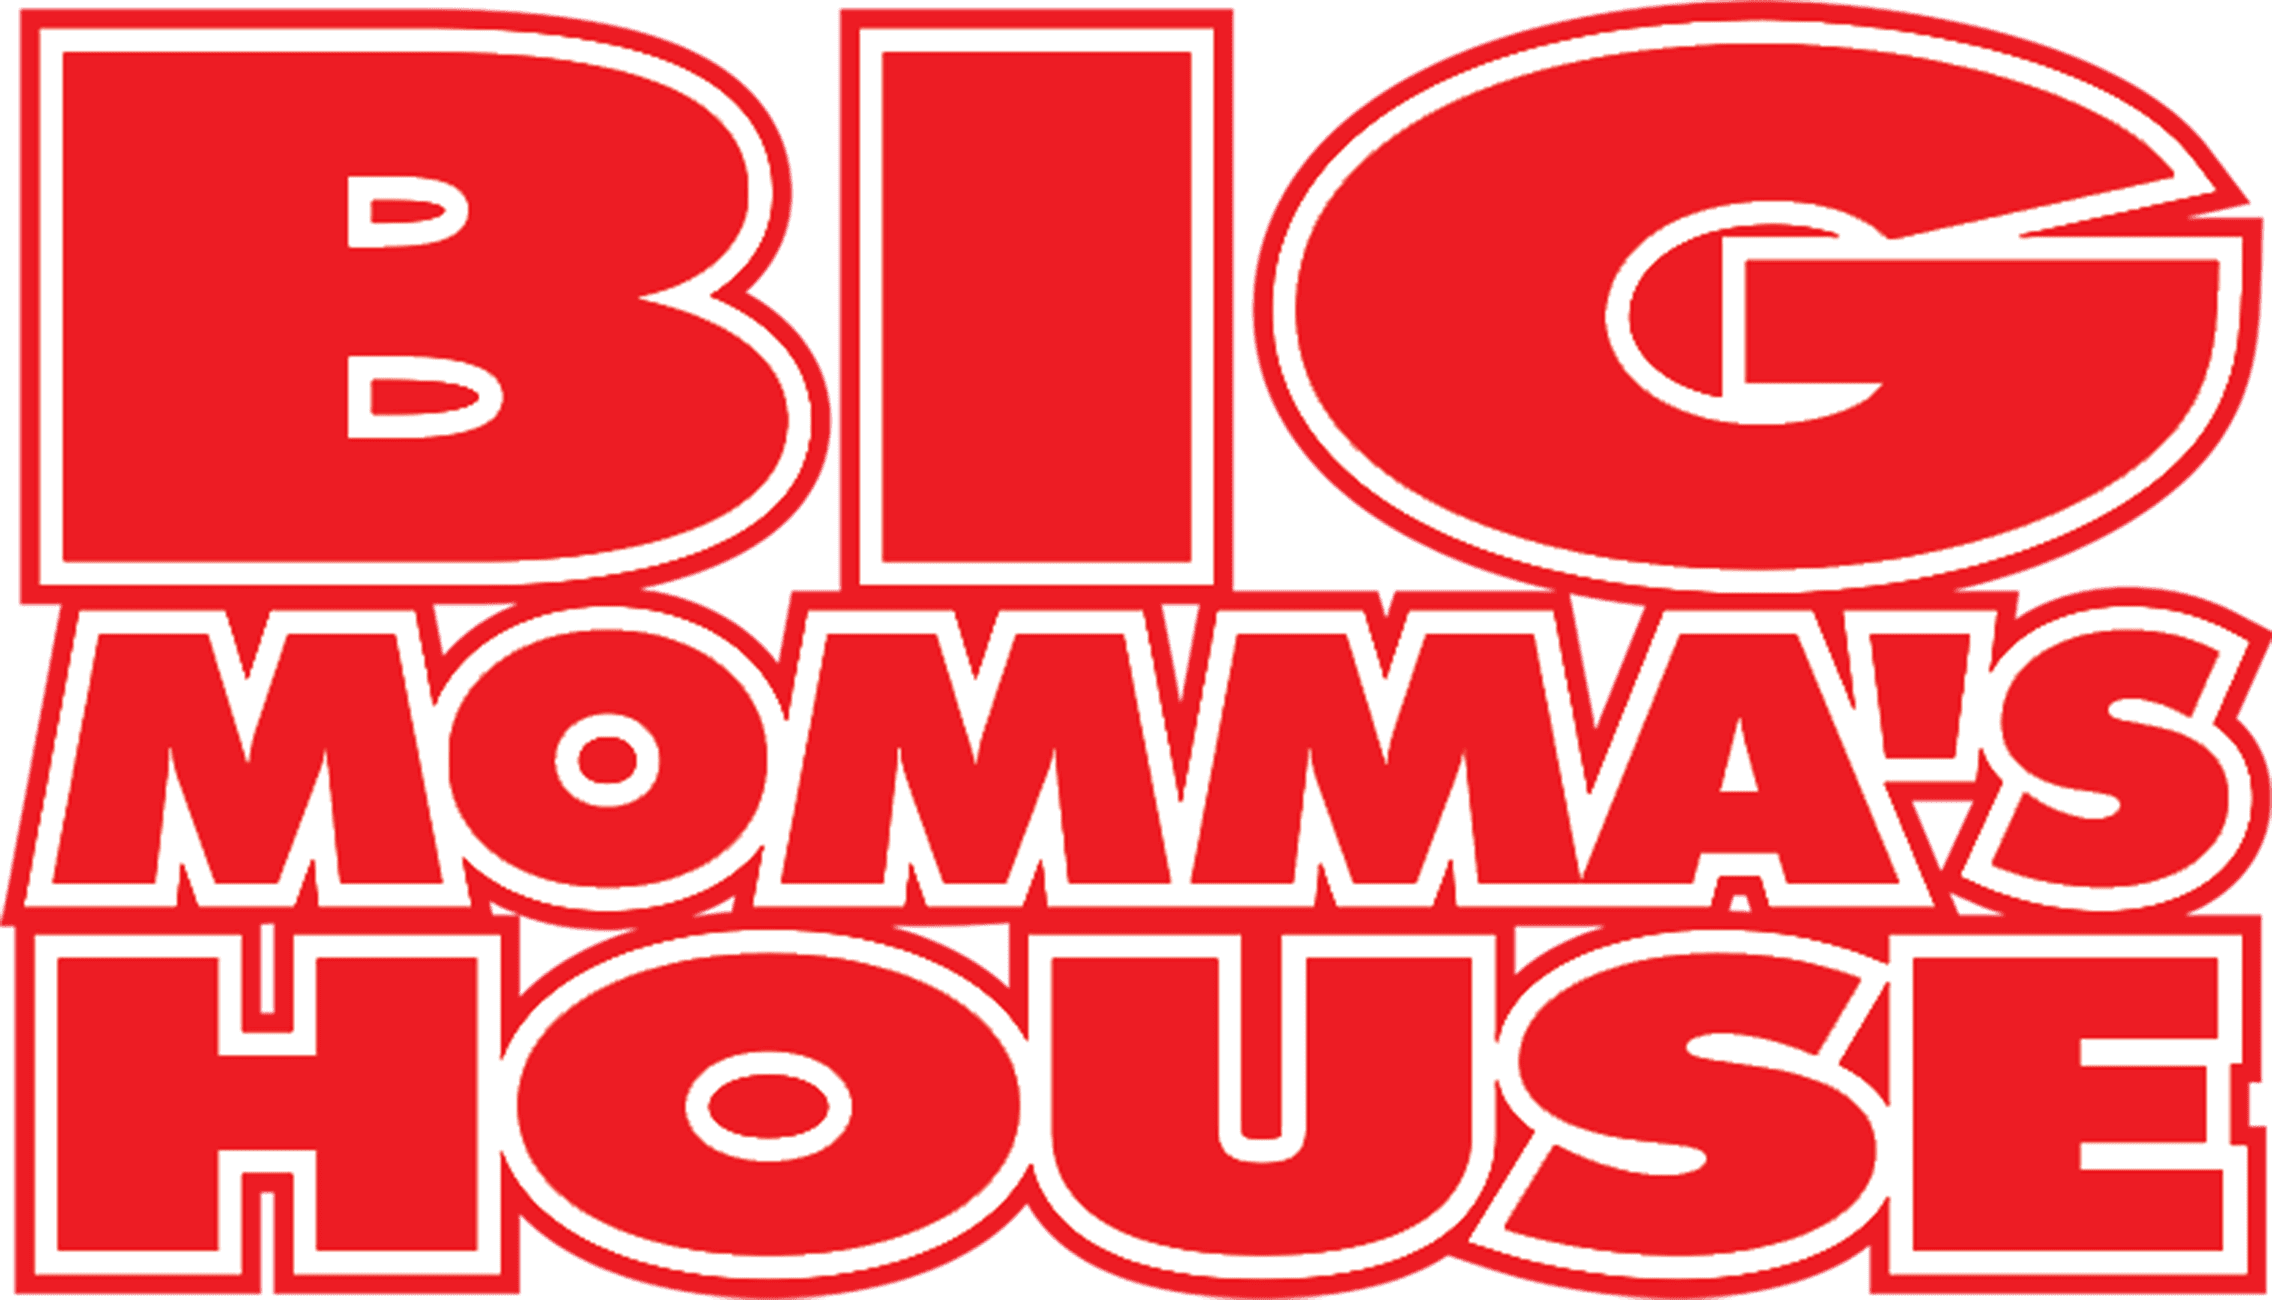 Big Momma's House logo